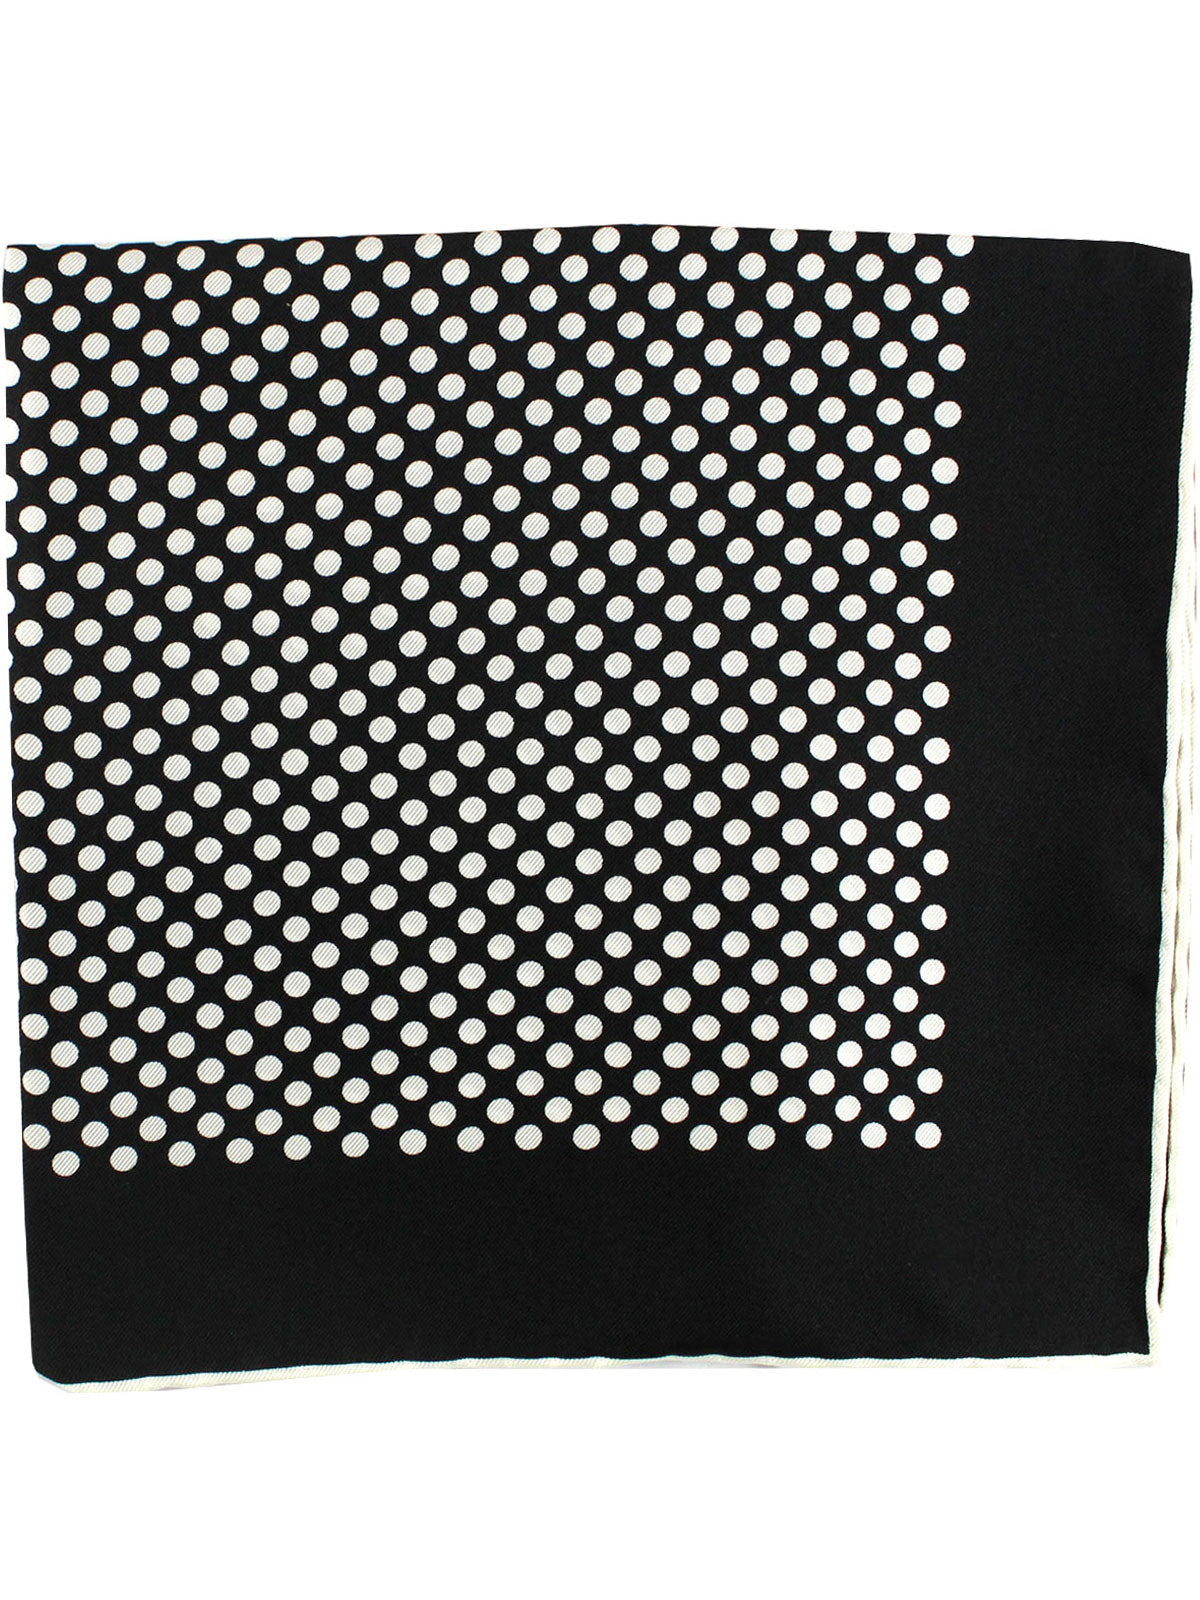 Tom Ford Silk Pocket Square Black White Dots